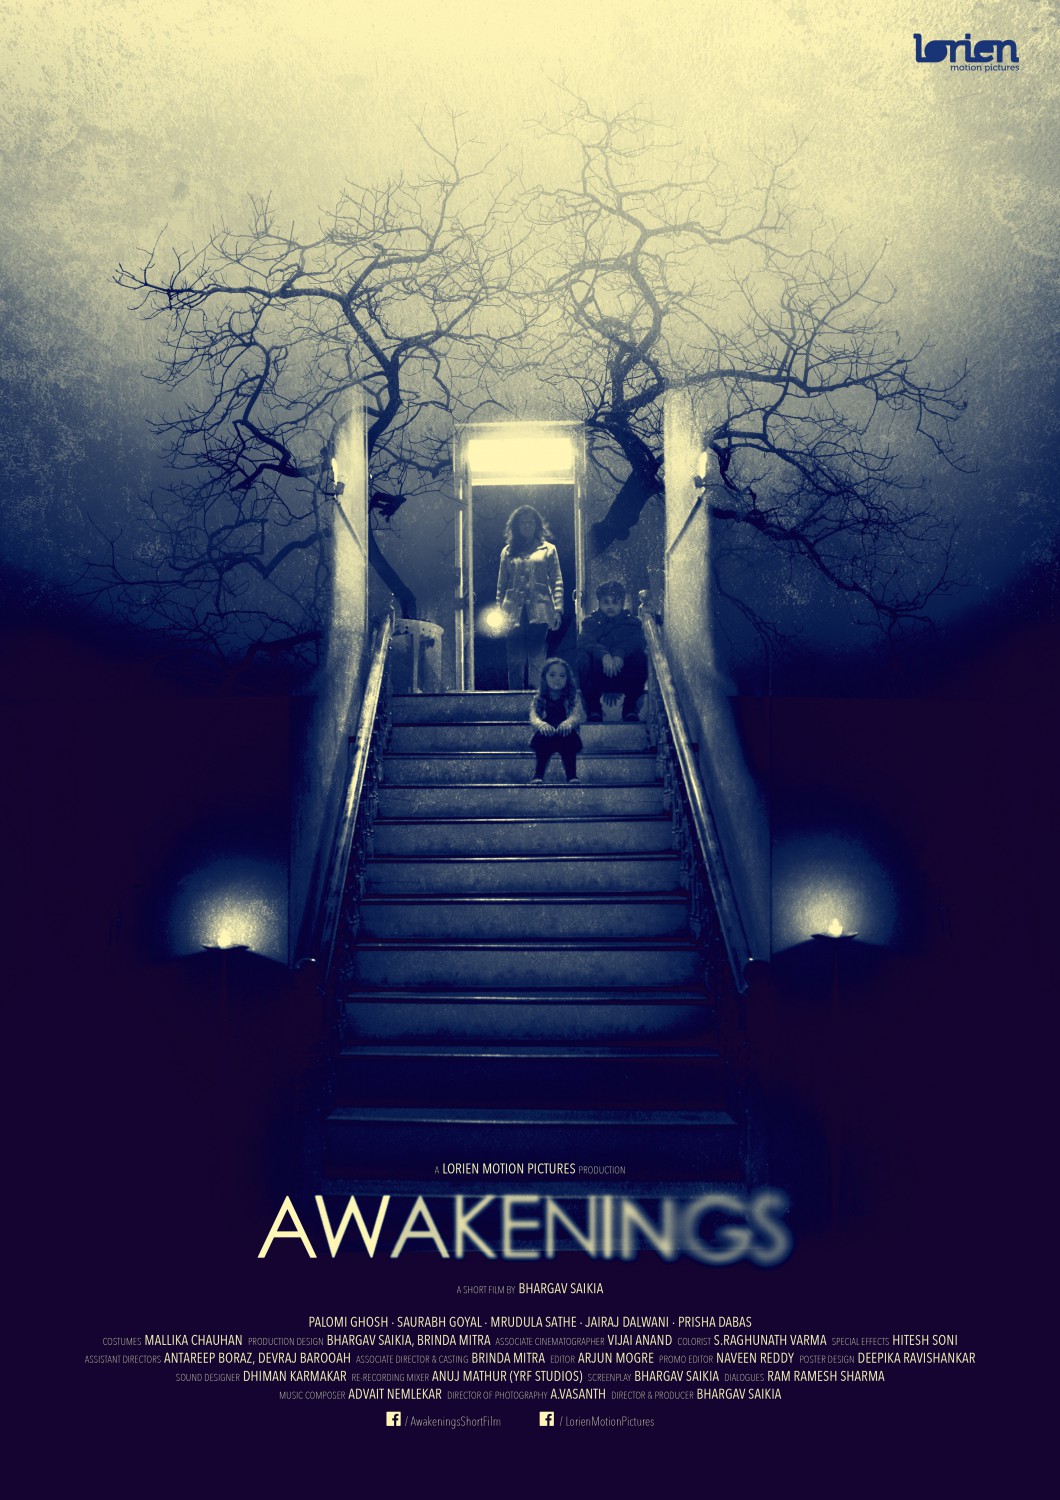 Extra Large Movie Poster Image for Awakenings